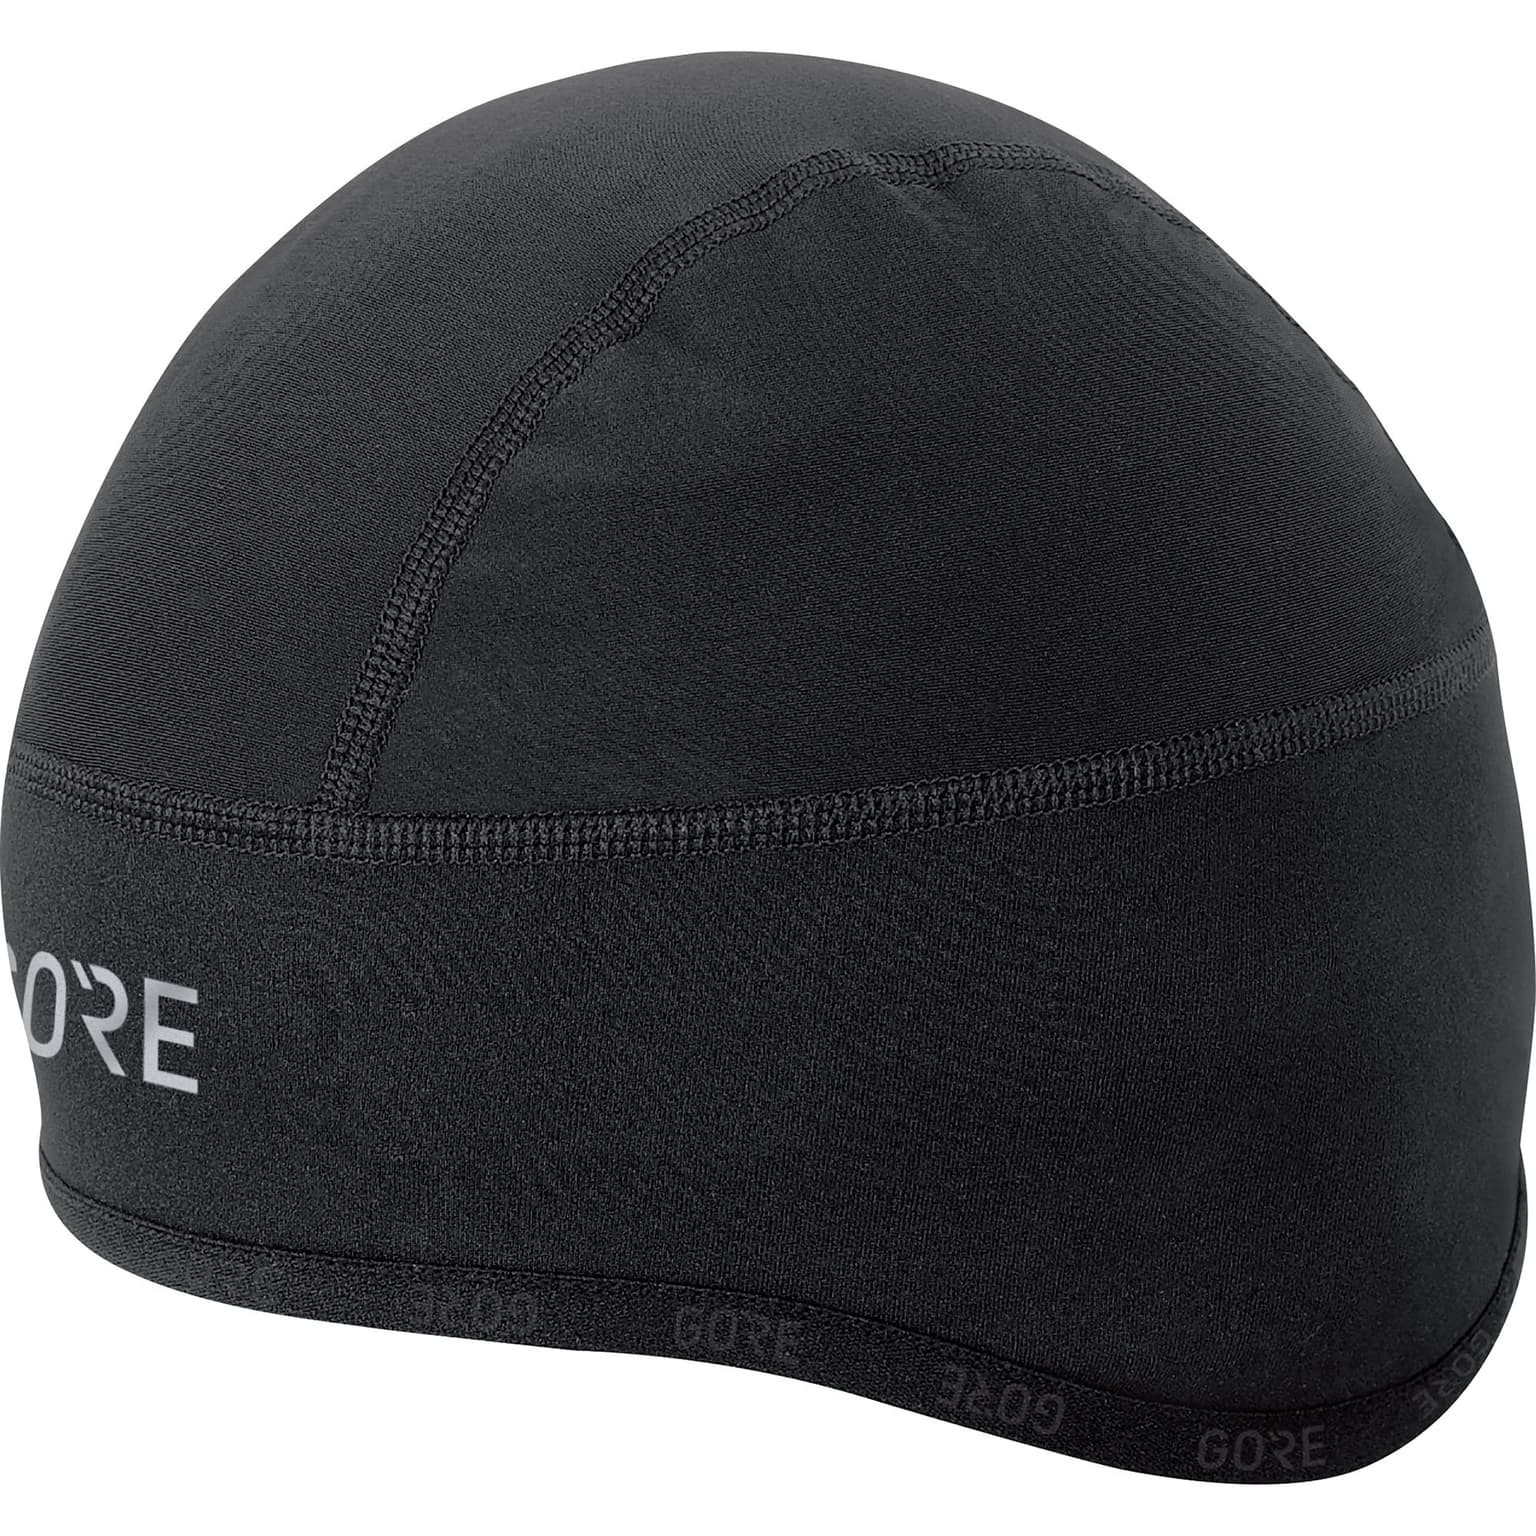 Gore Gore C3 GWS Helmet Kappe Bike-Mütze noir 1